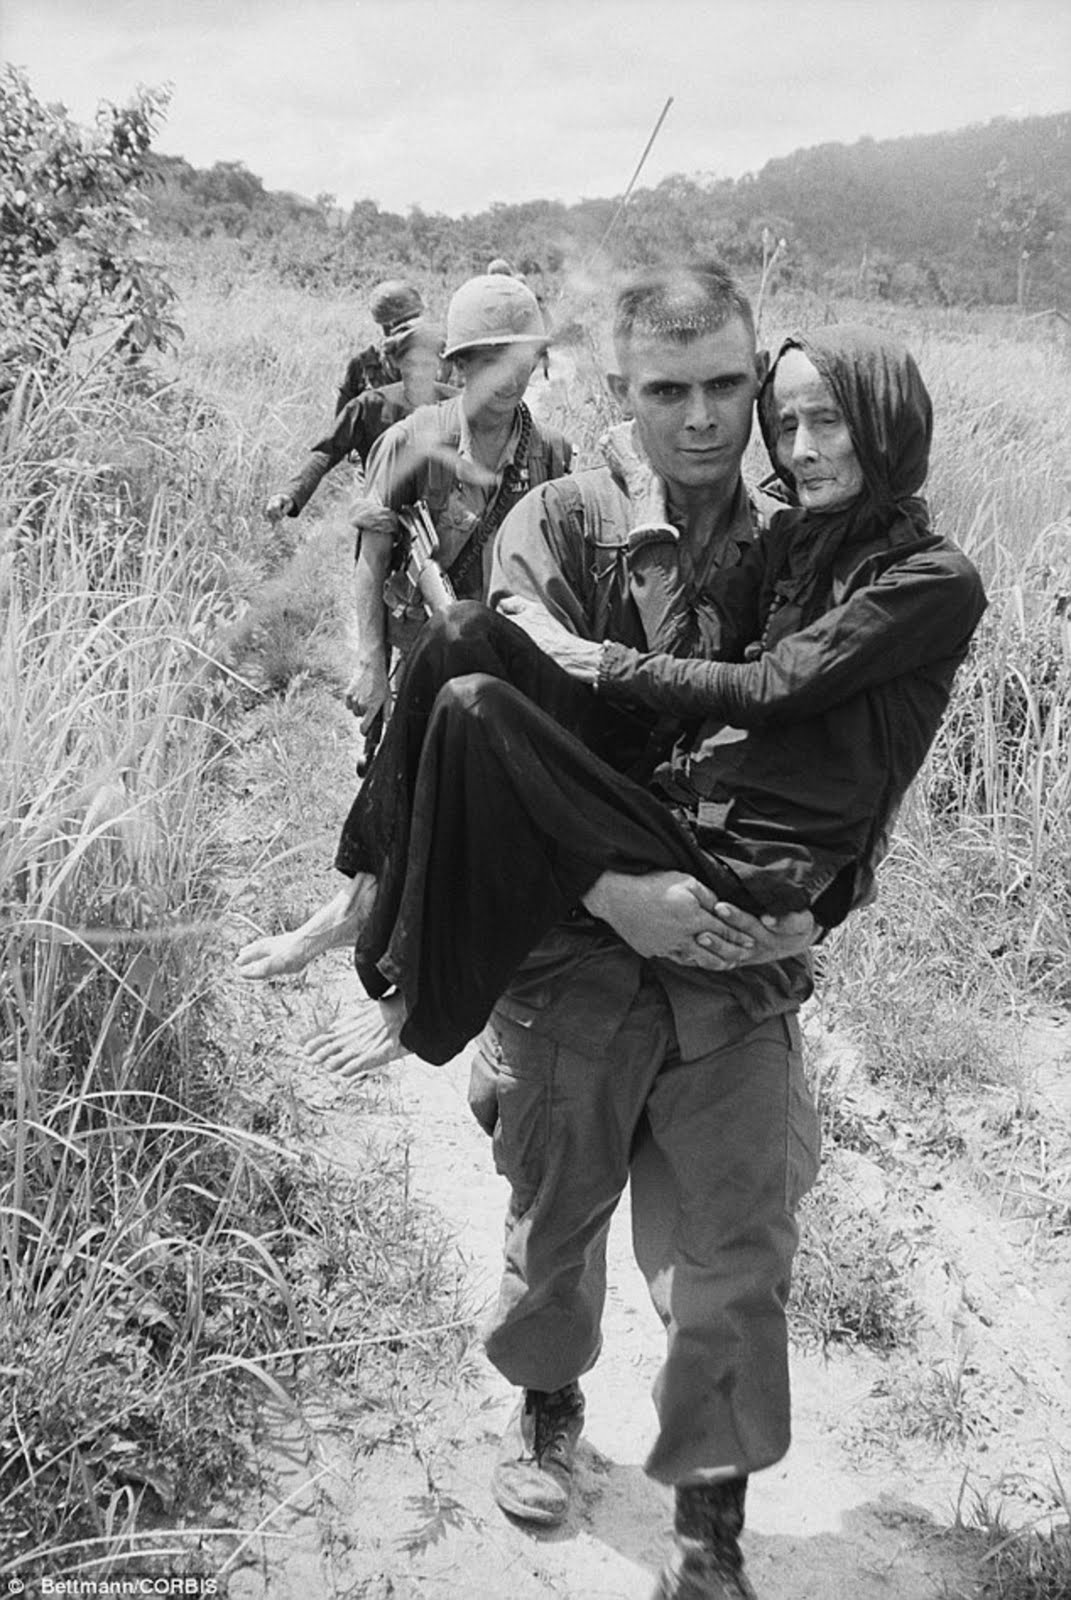 THE TRUE CONDUCT OF THE VIETNAM VETERAN WITH THE VIETNAMESE- WOMEN AND CHILDREN